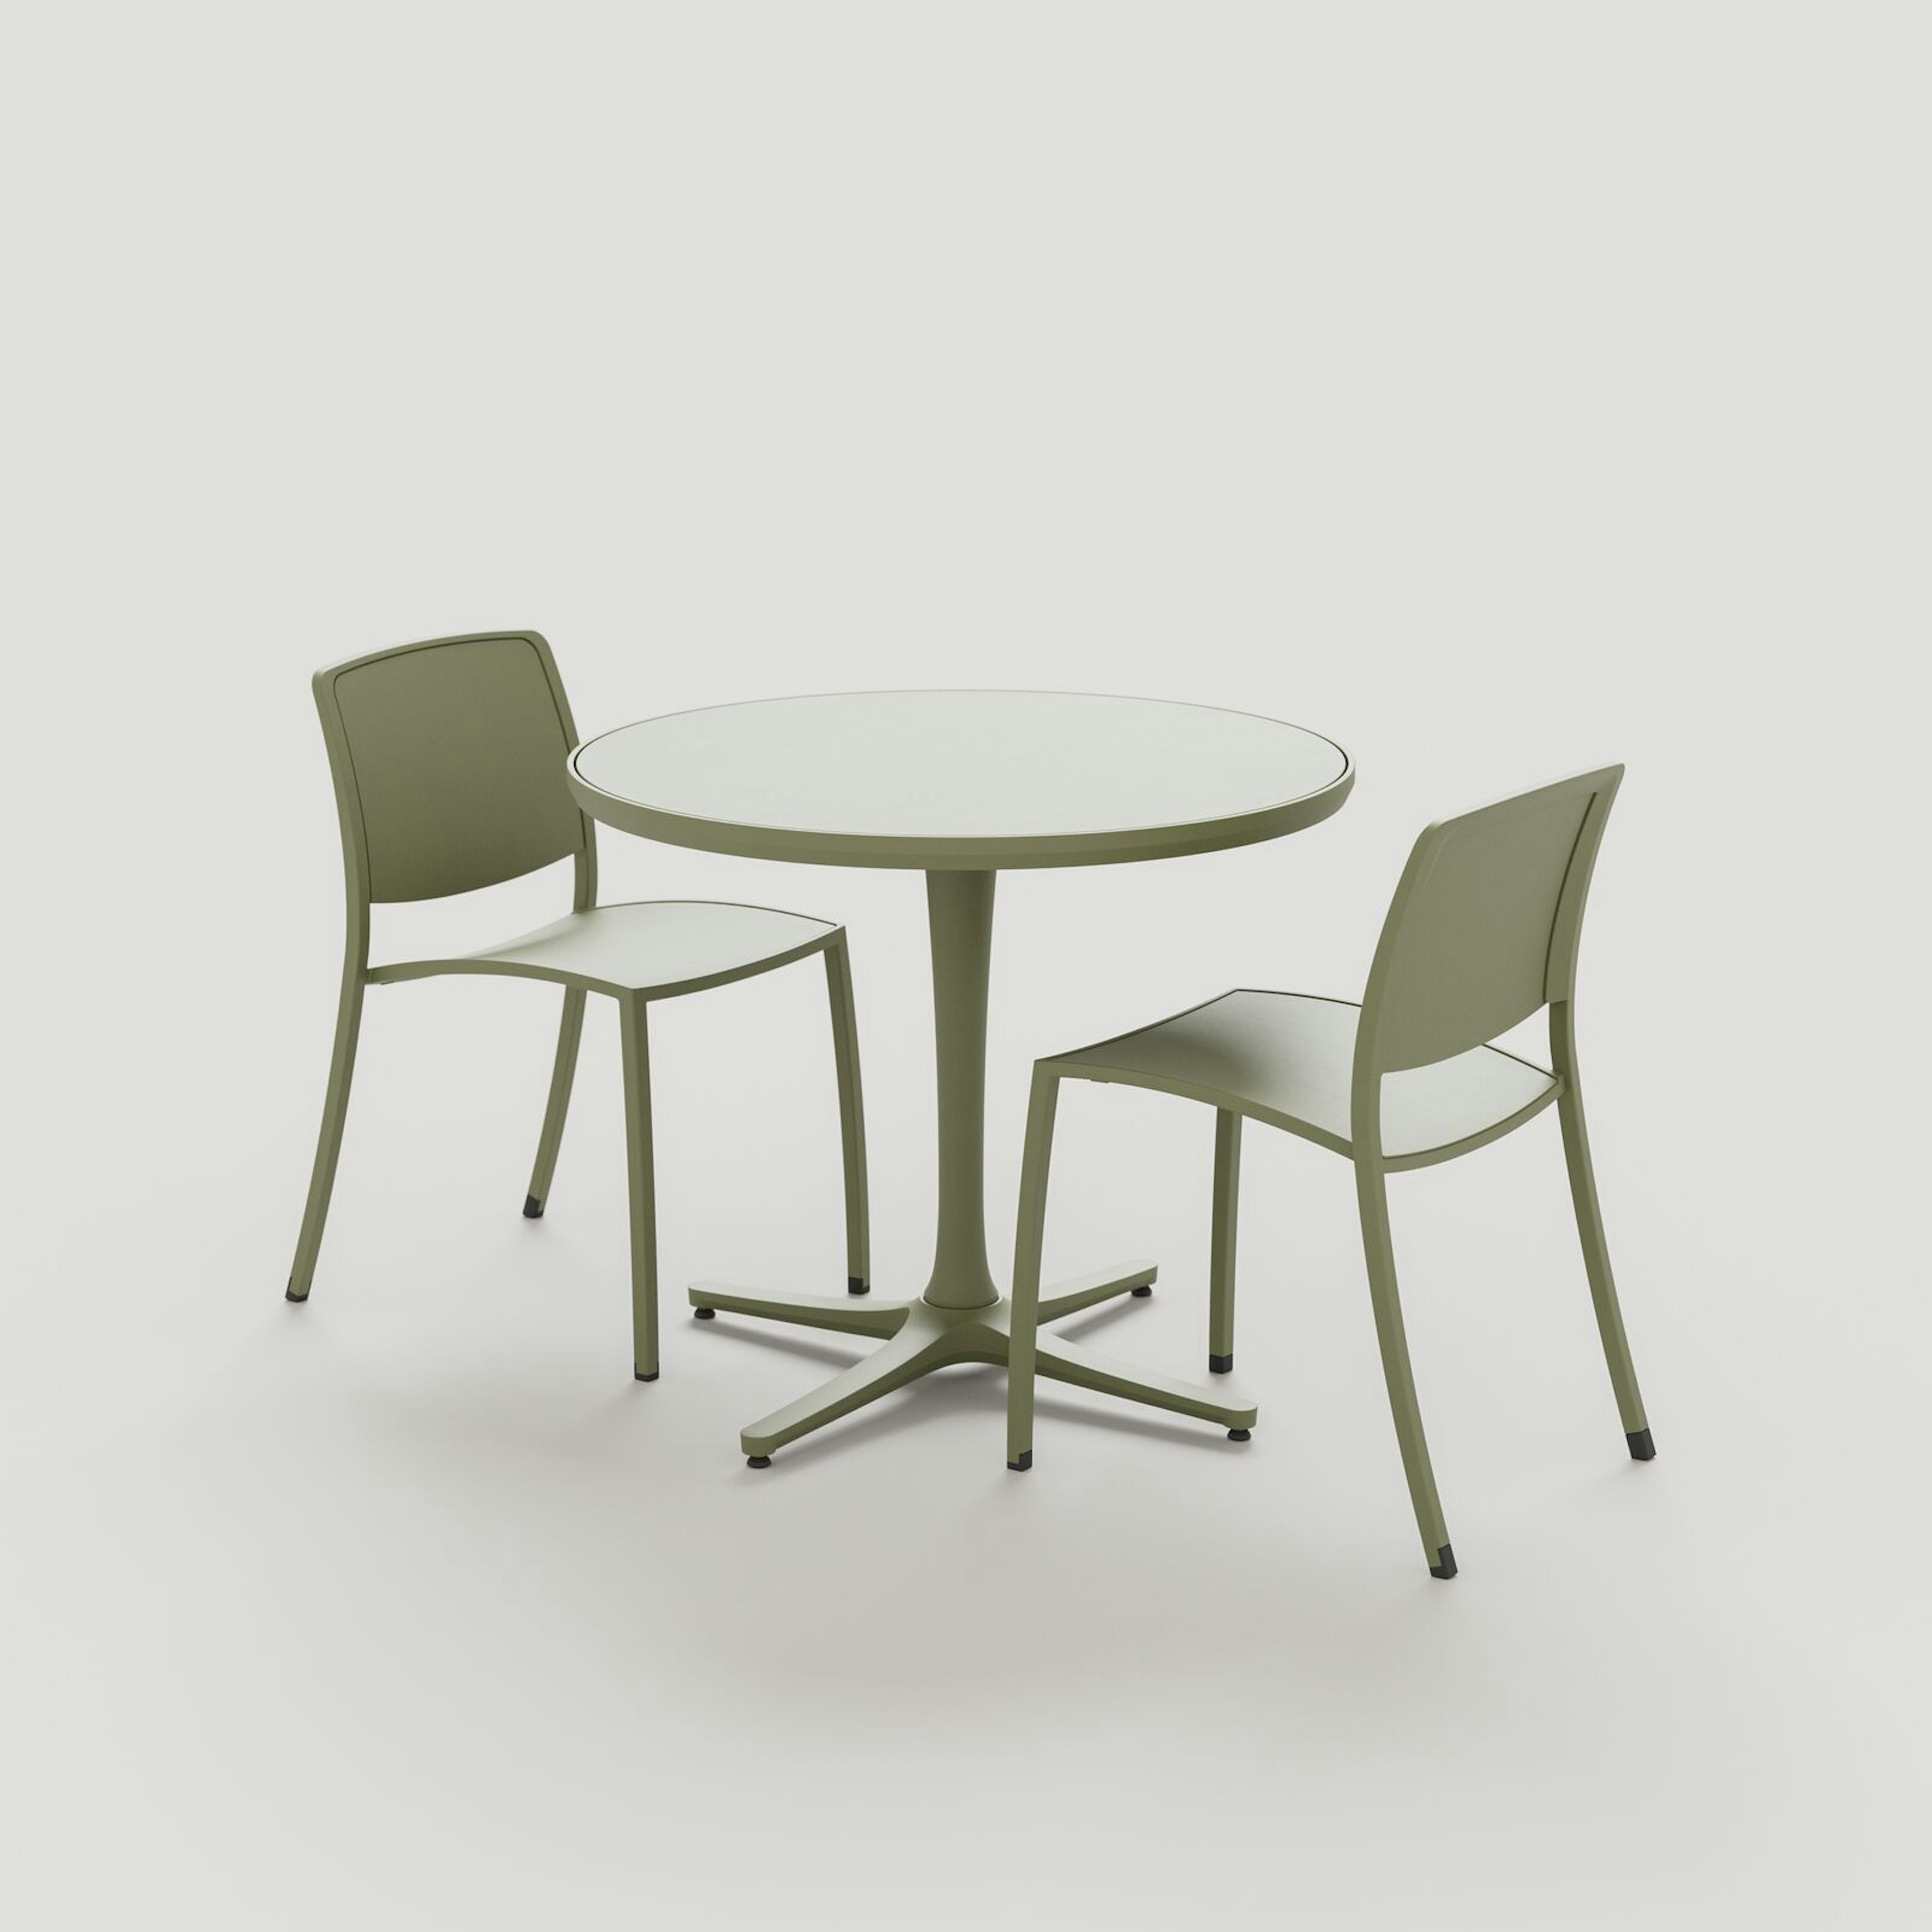 Avivo Pedestal Table: Olive Texture